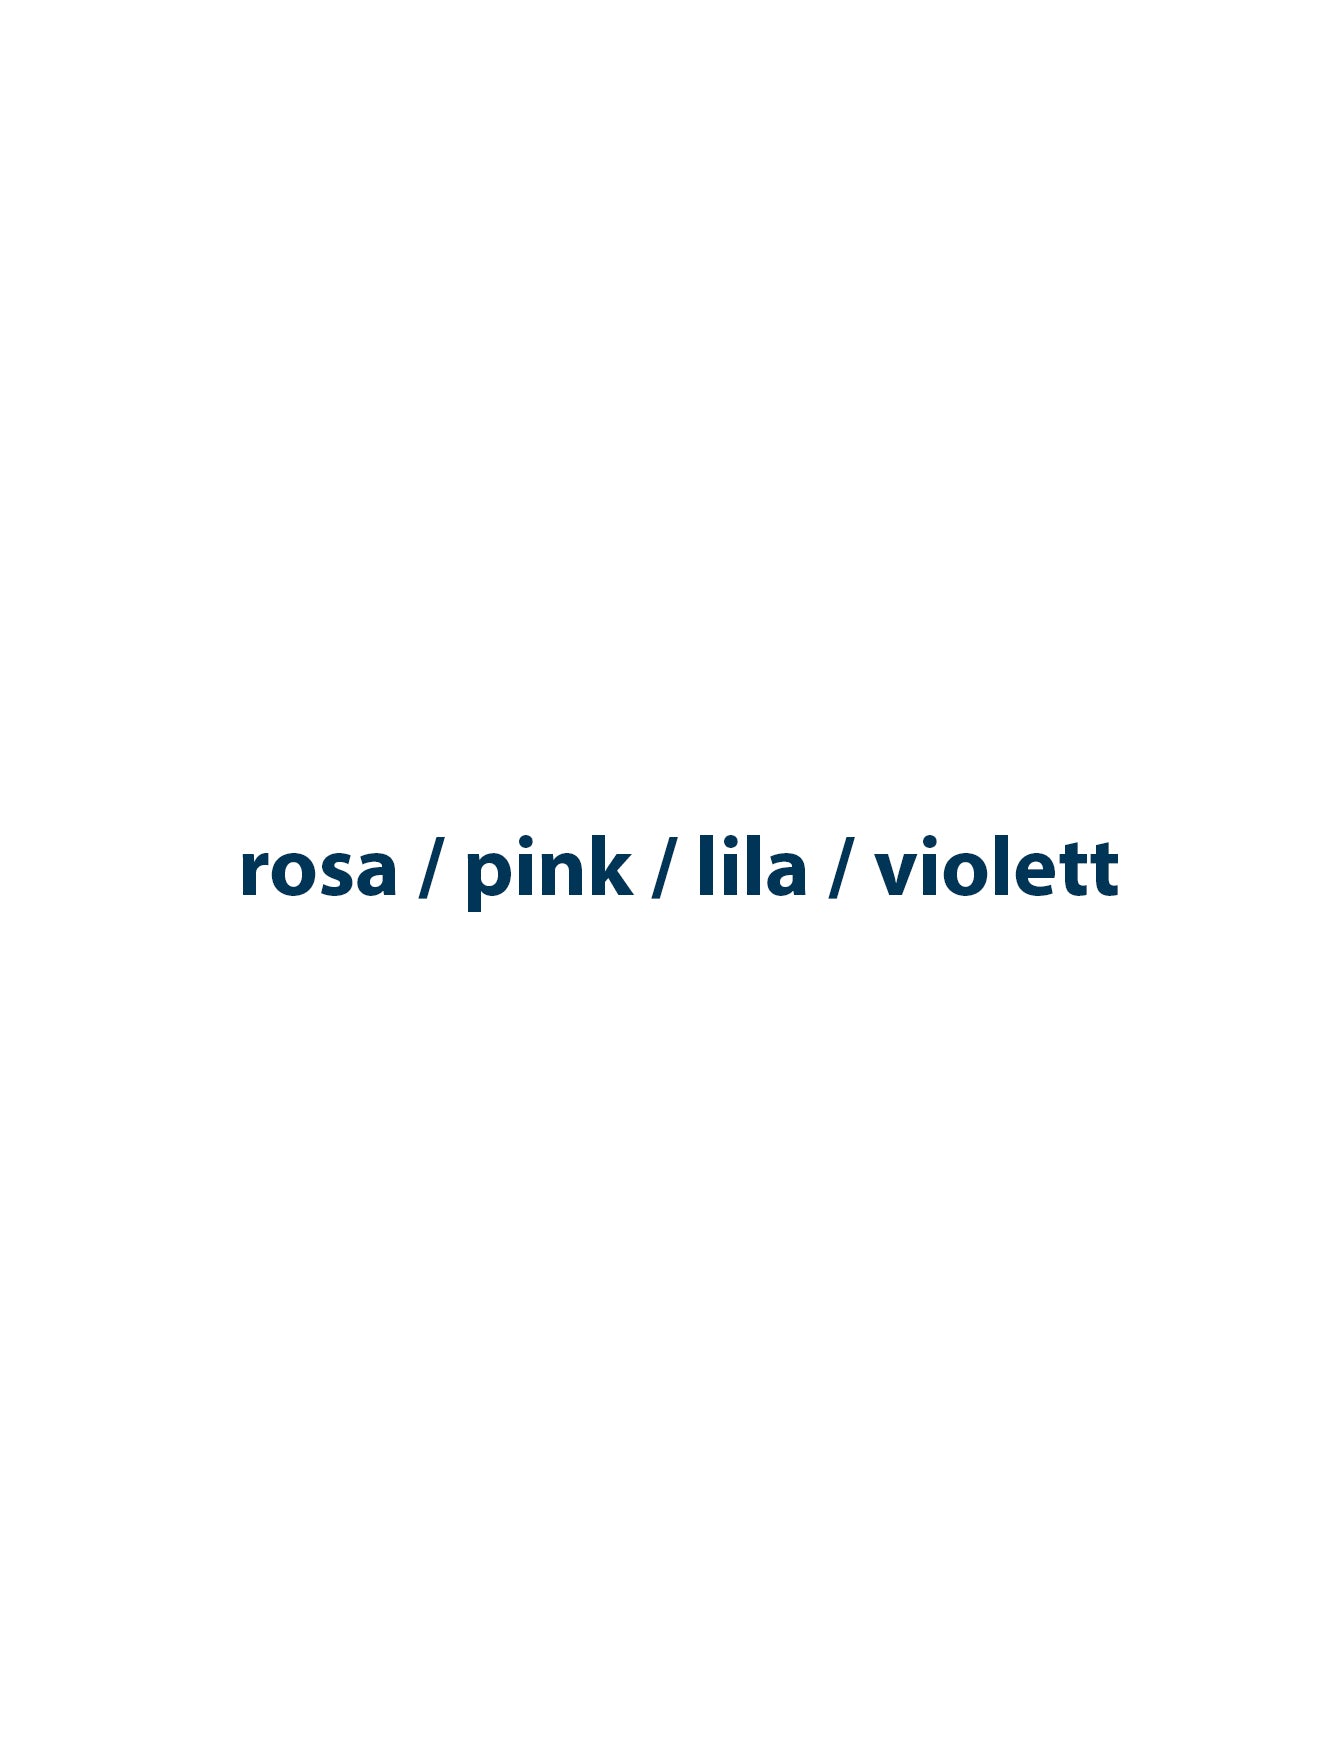 rosa / pink / lila / violett Herzen